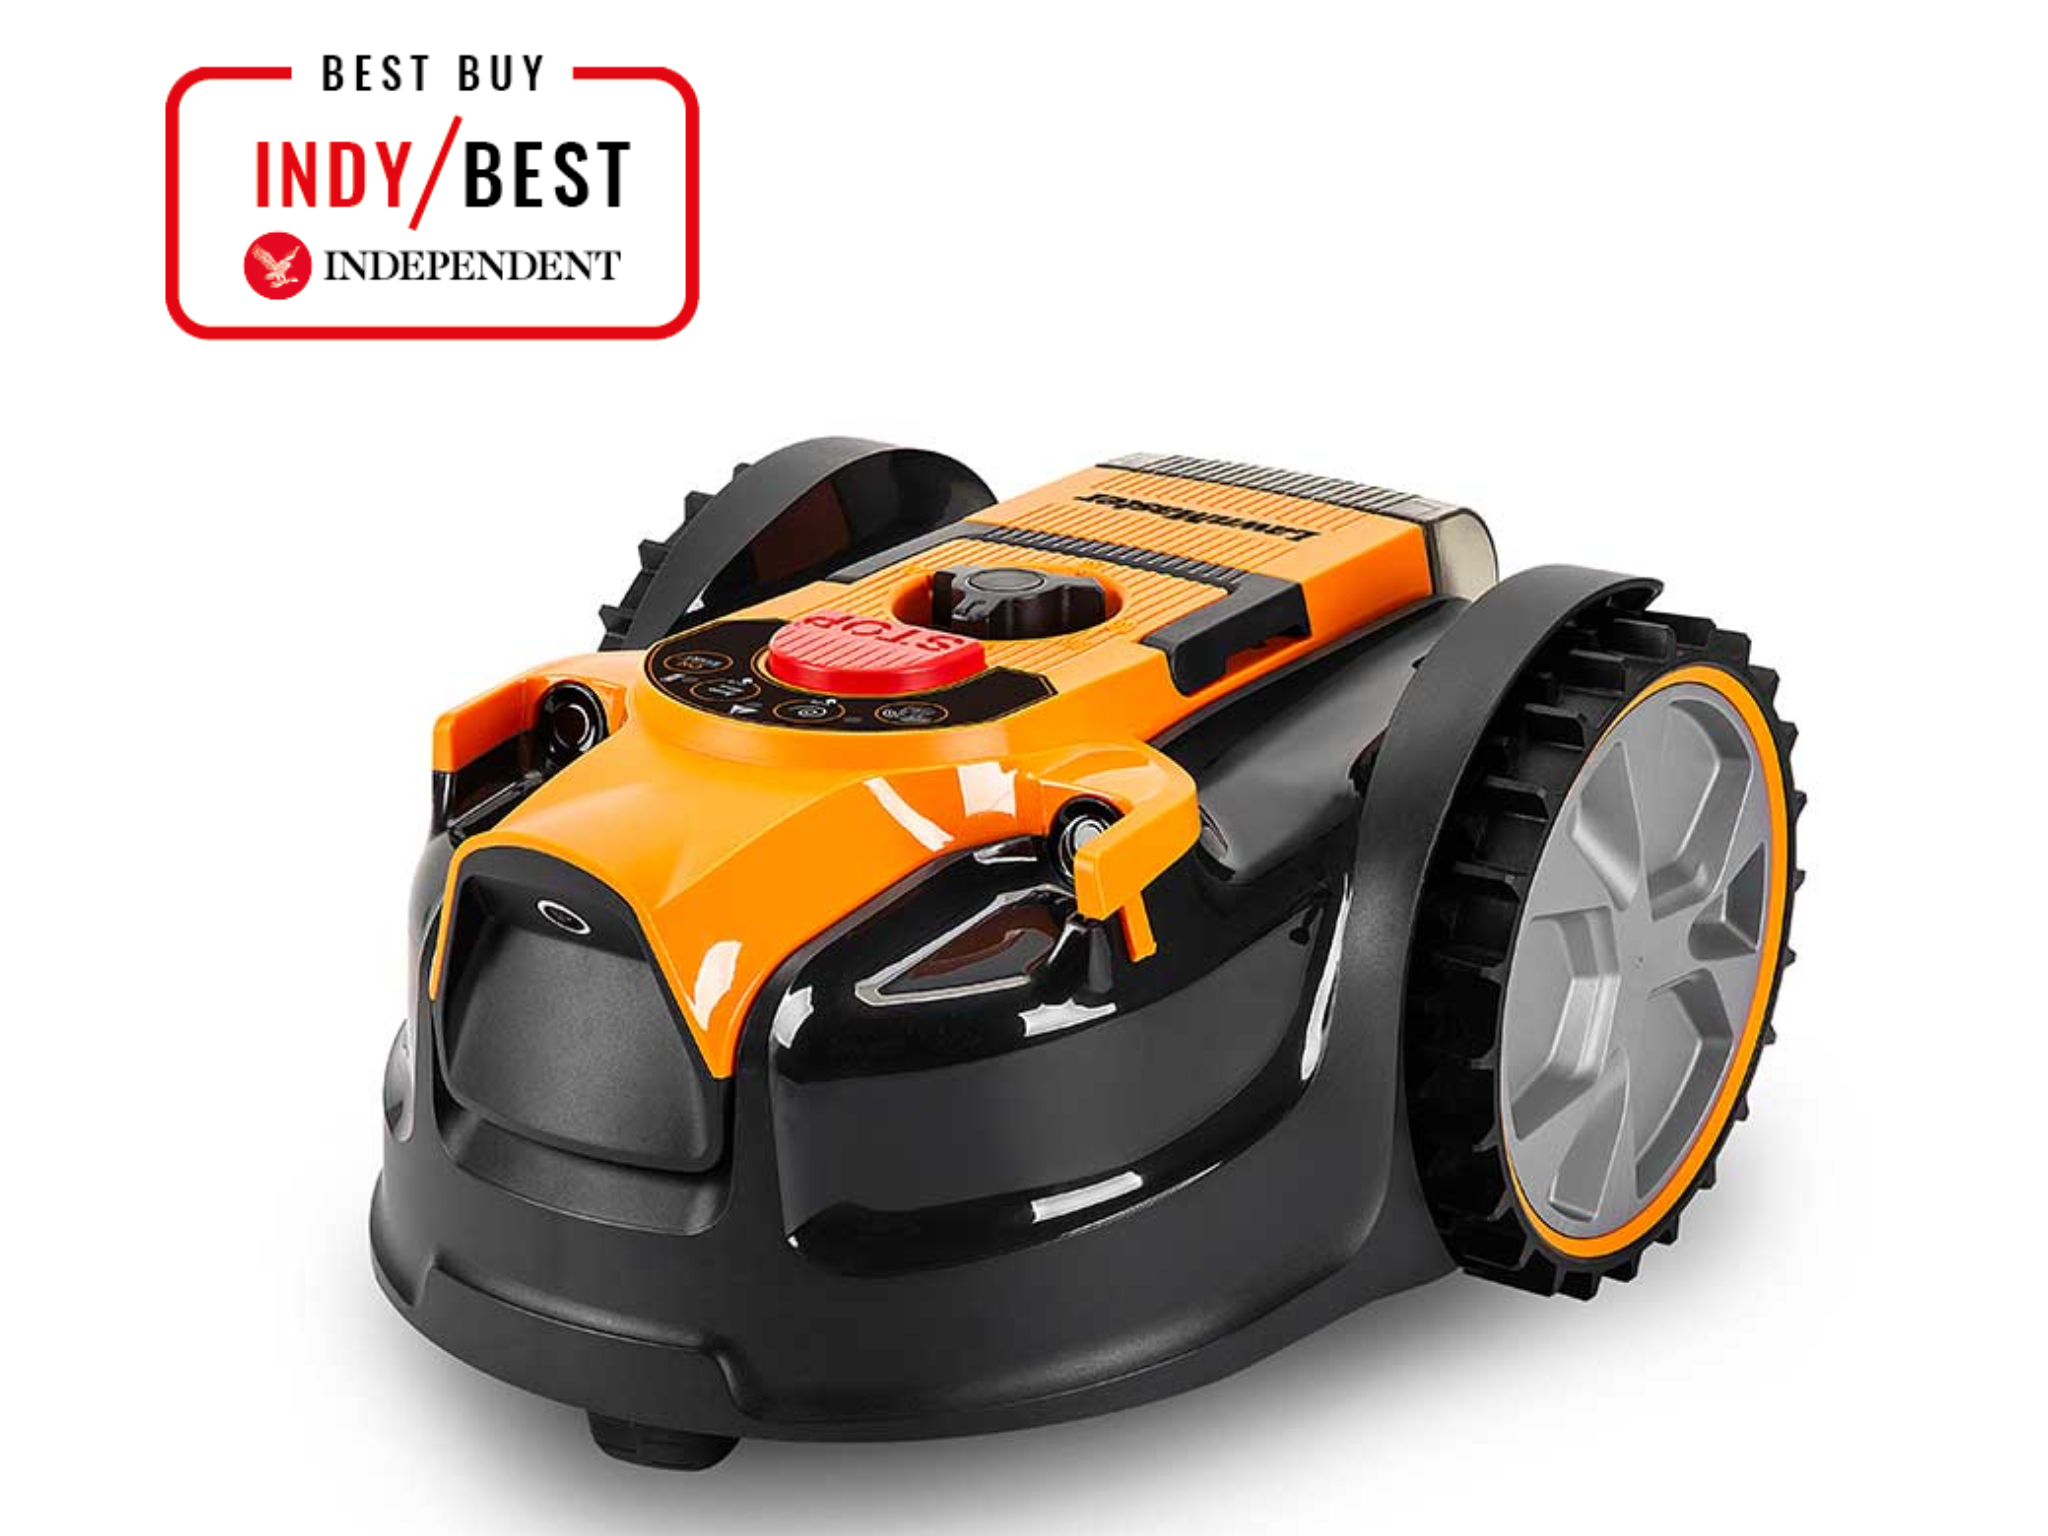 VBRM16-Indybest-robot-lawn-mower-review